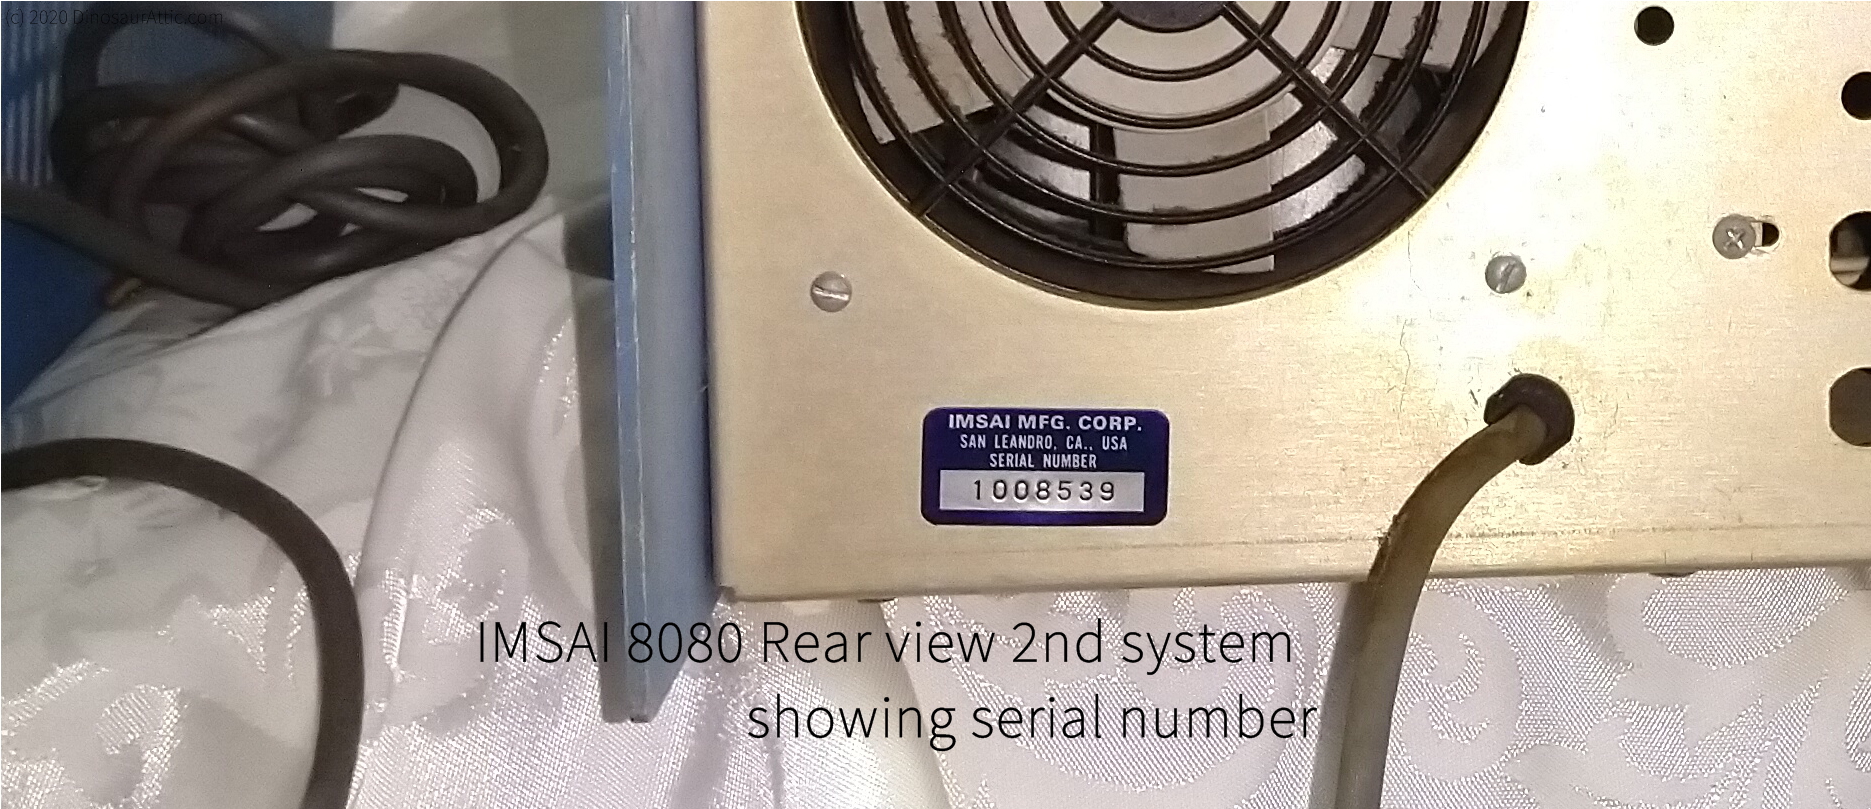 <b>IMSAI 8080 Rear view 2nd system - serial number</b>